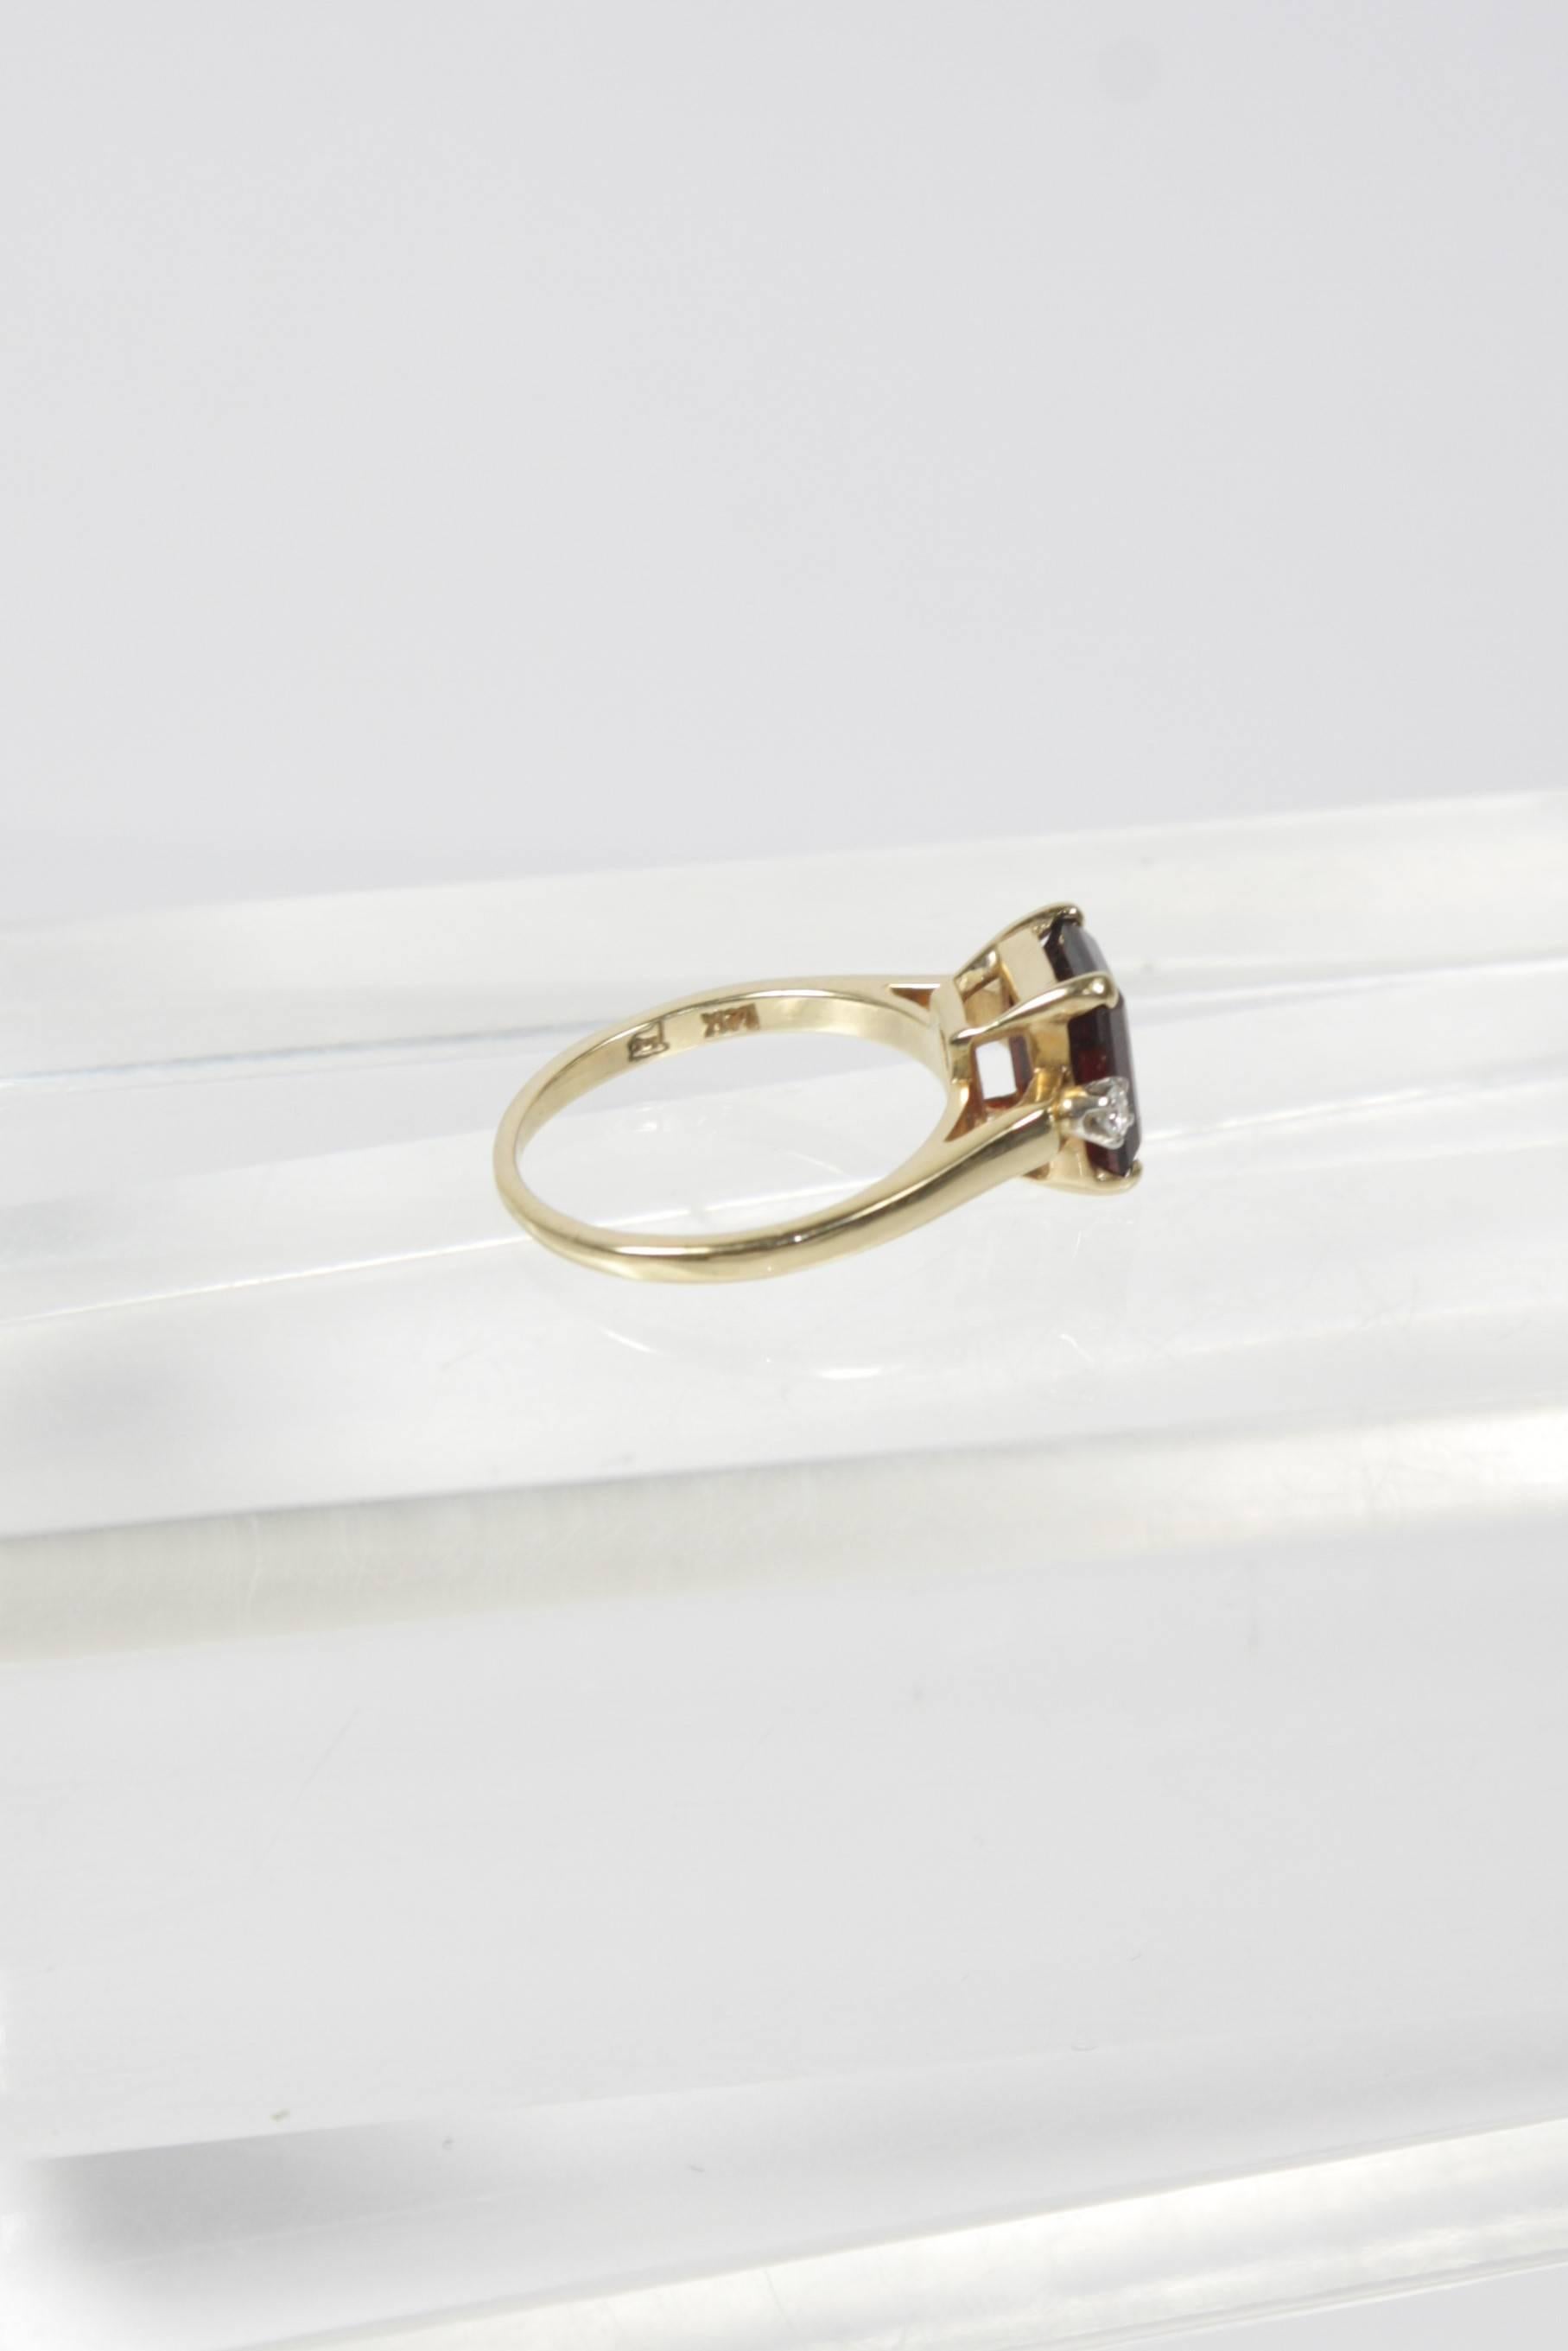 Emerald Cut Garnet and Diamond 14KT Yellow Gold Ring Size 6 3